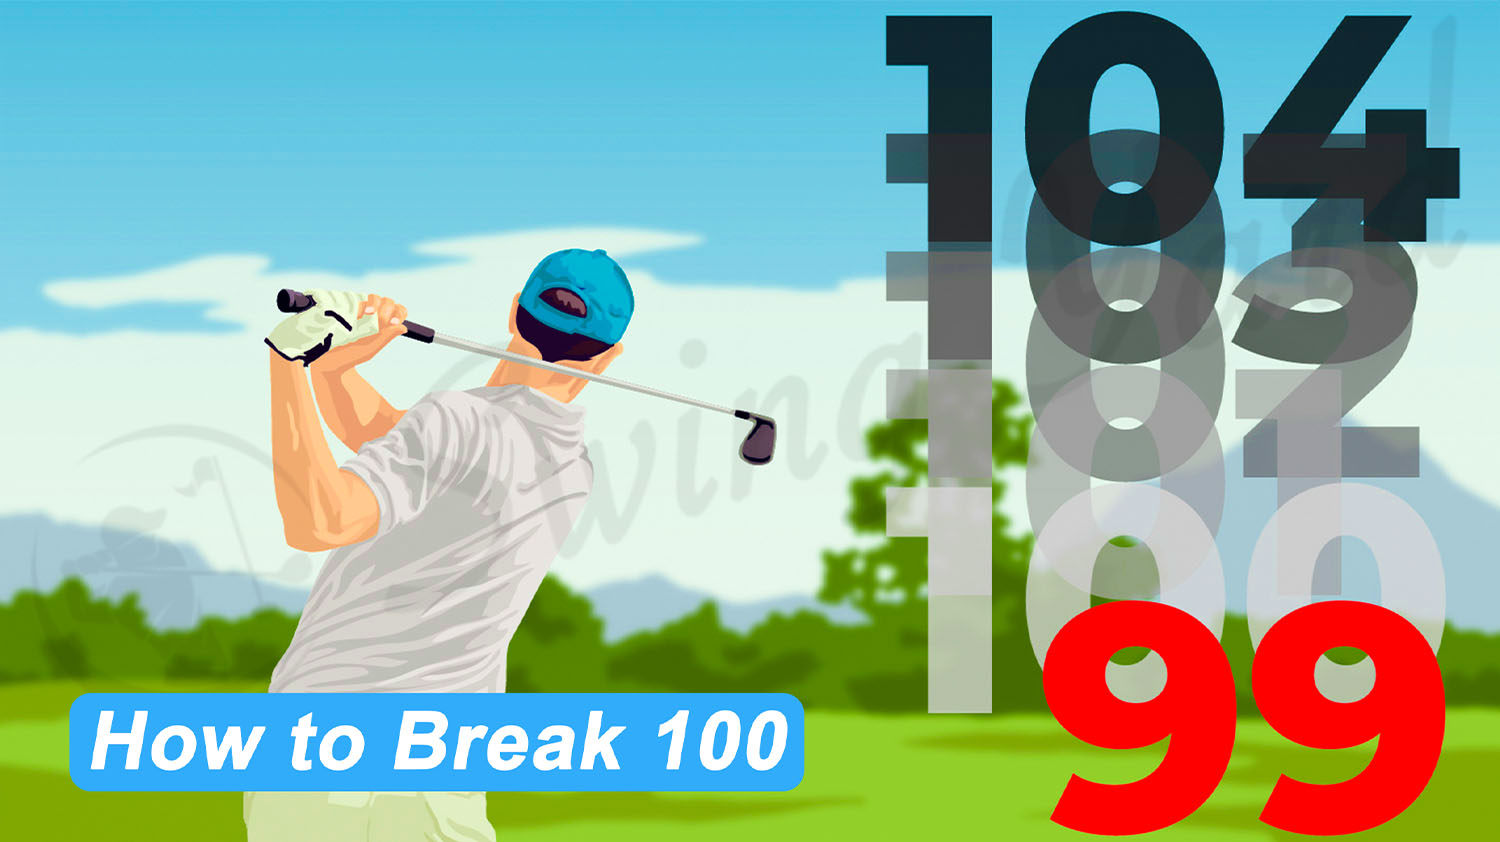 guy learning how to break 100